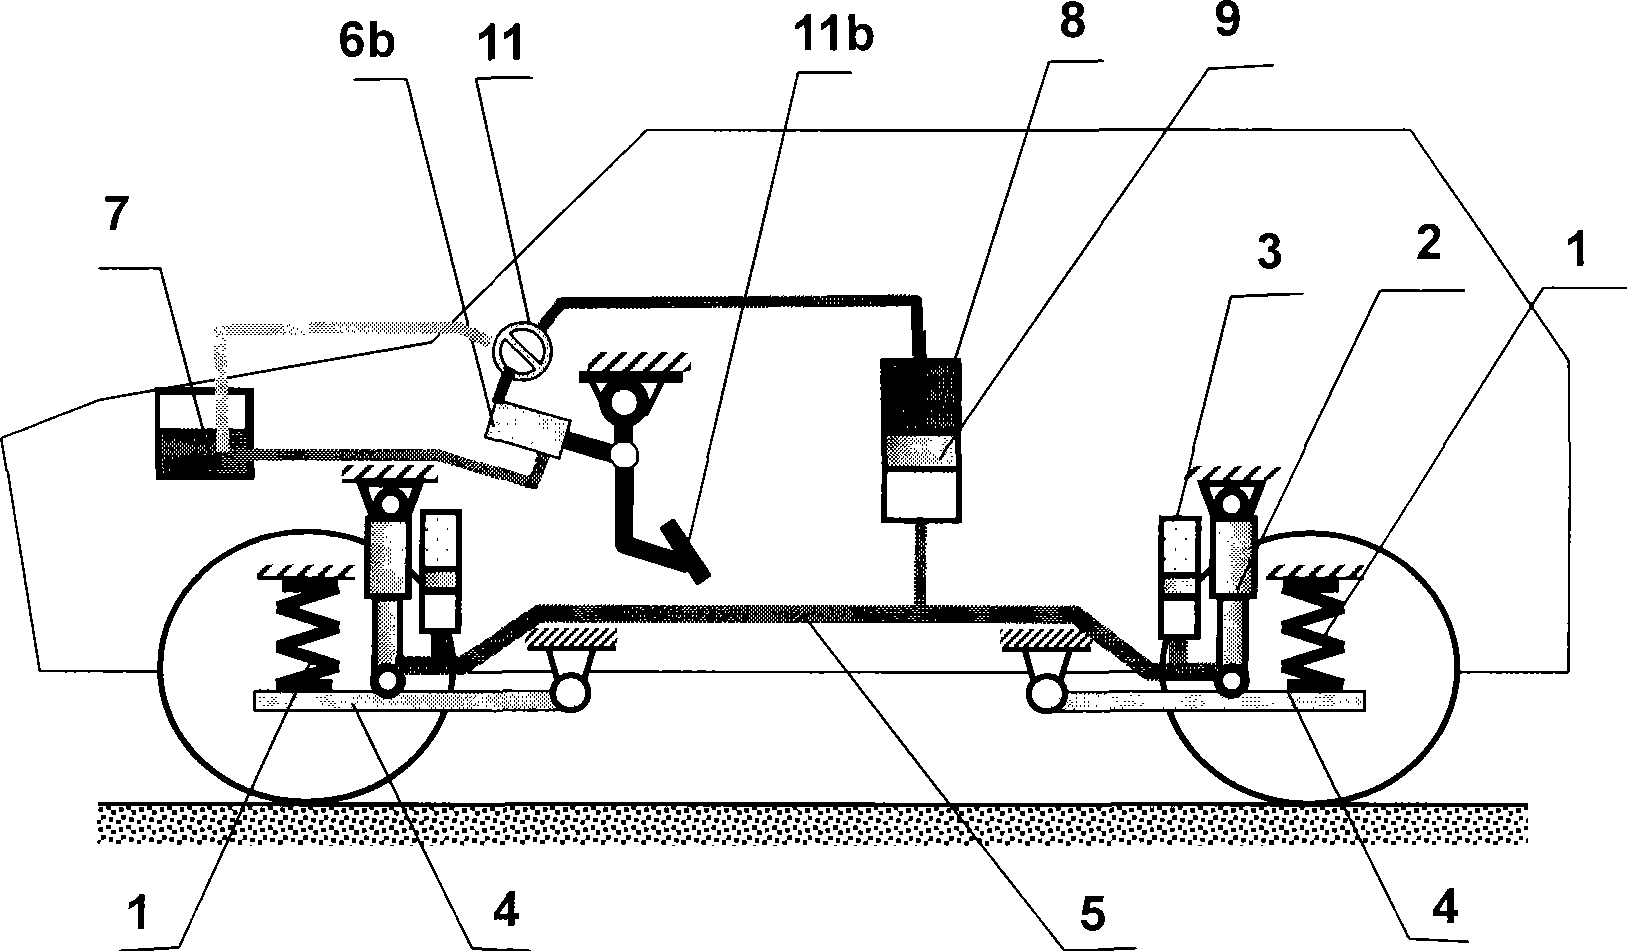 Suspension system of lifting load-bearing impact damper